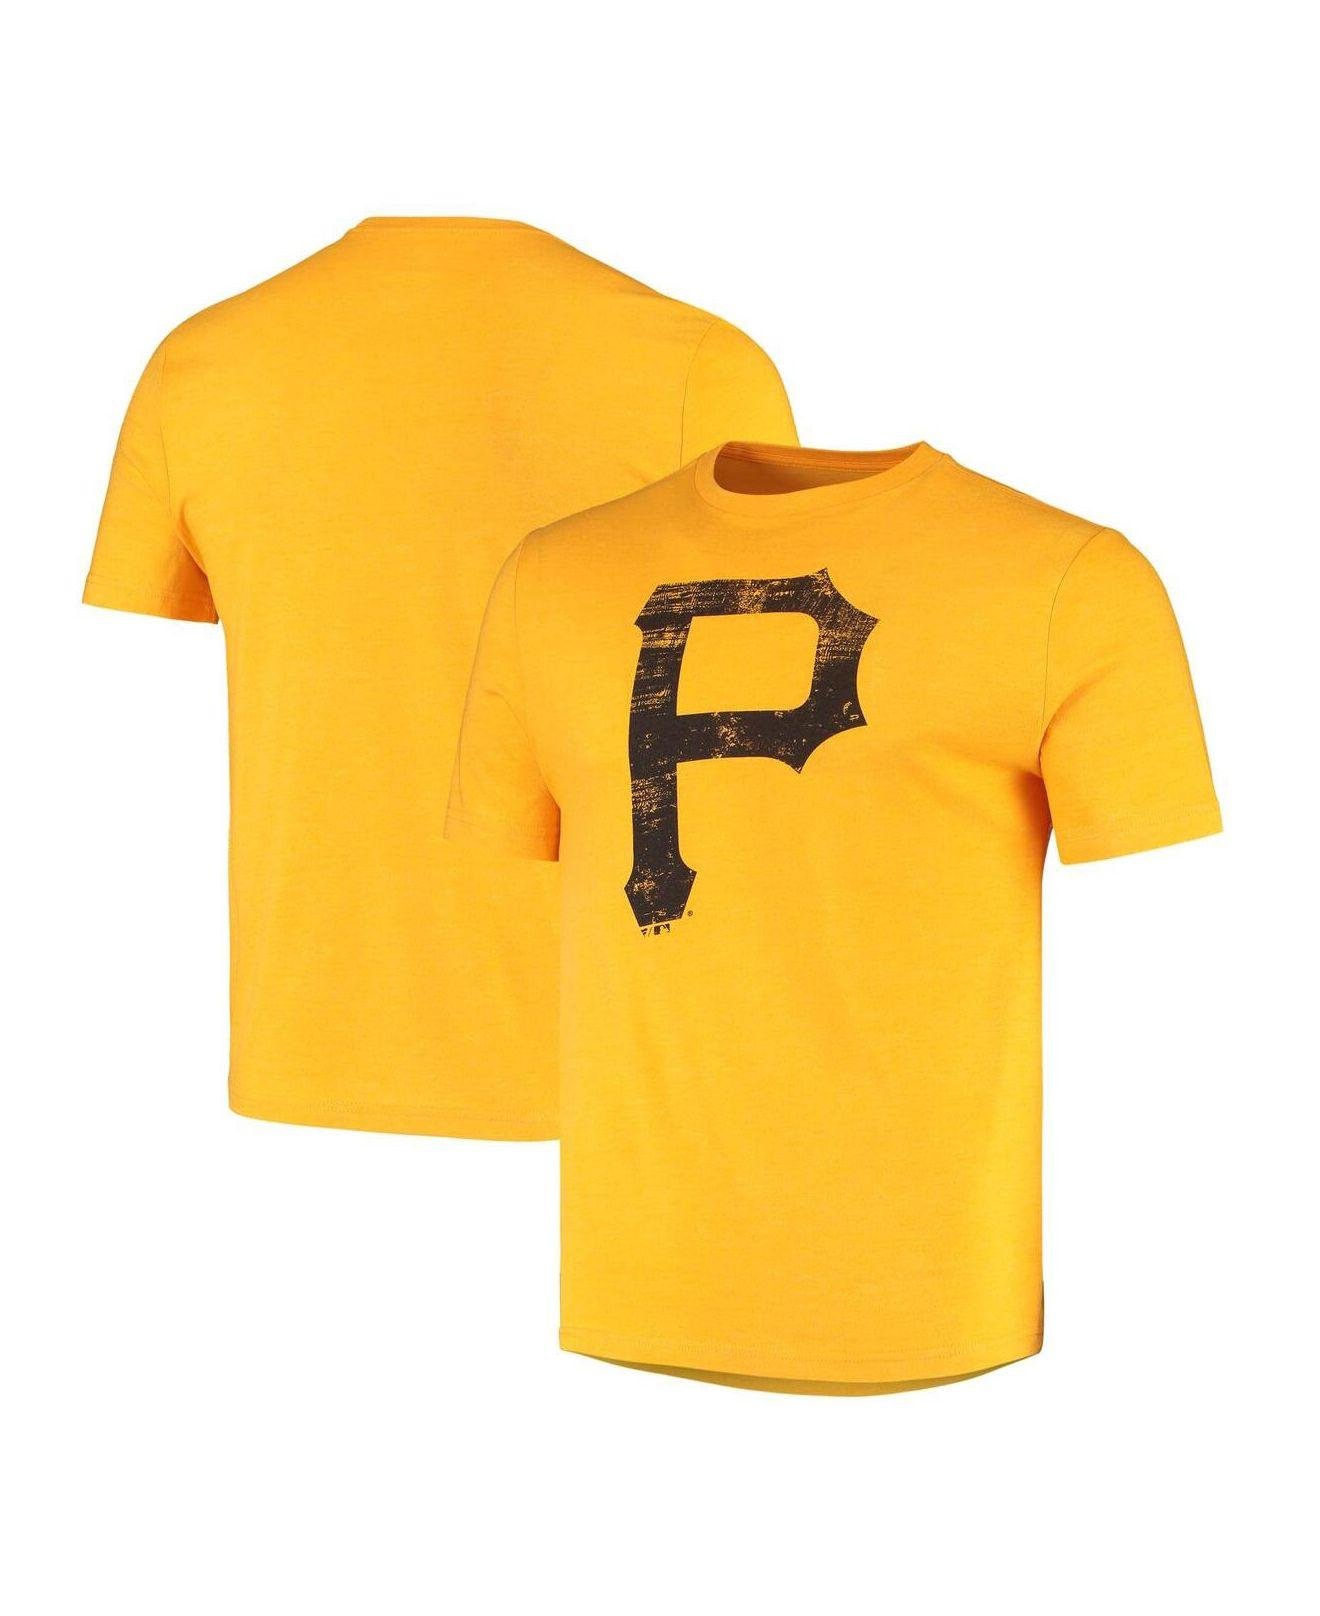 Fanatics Men's Heathered Royal Philadelphia Phillies Weathered Official Logo Tri-Blend T-Shirt Heather Royal